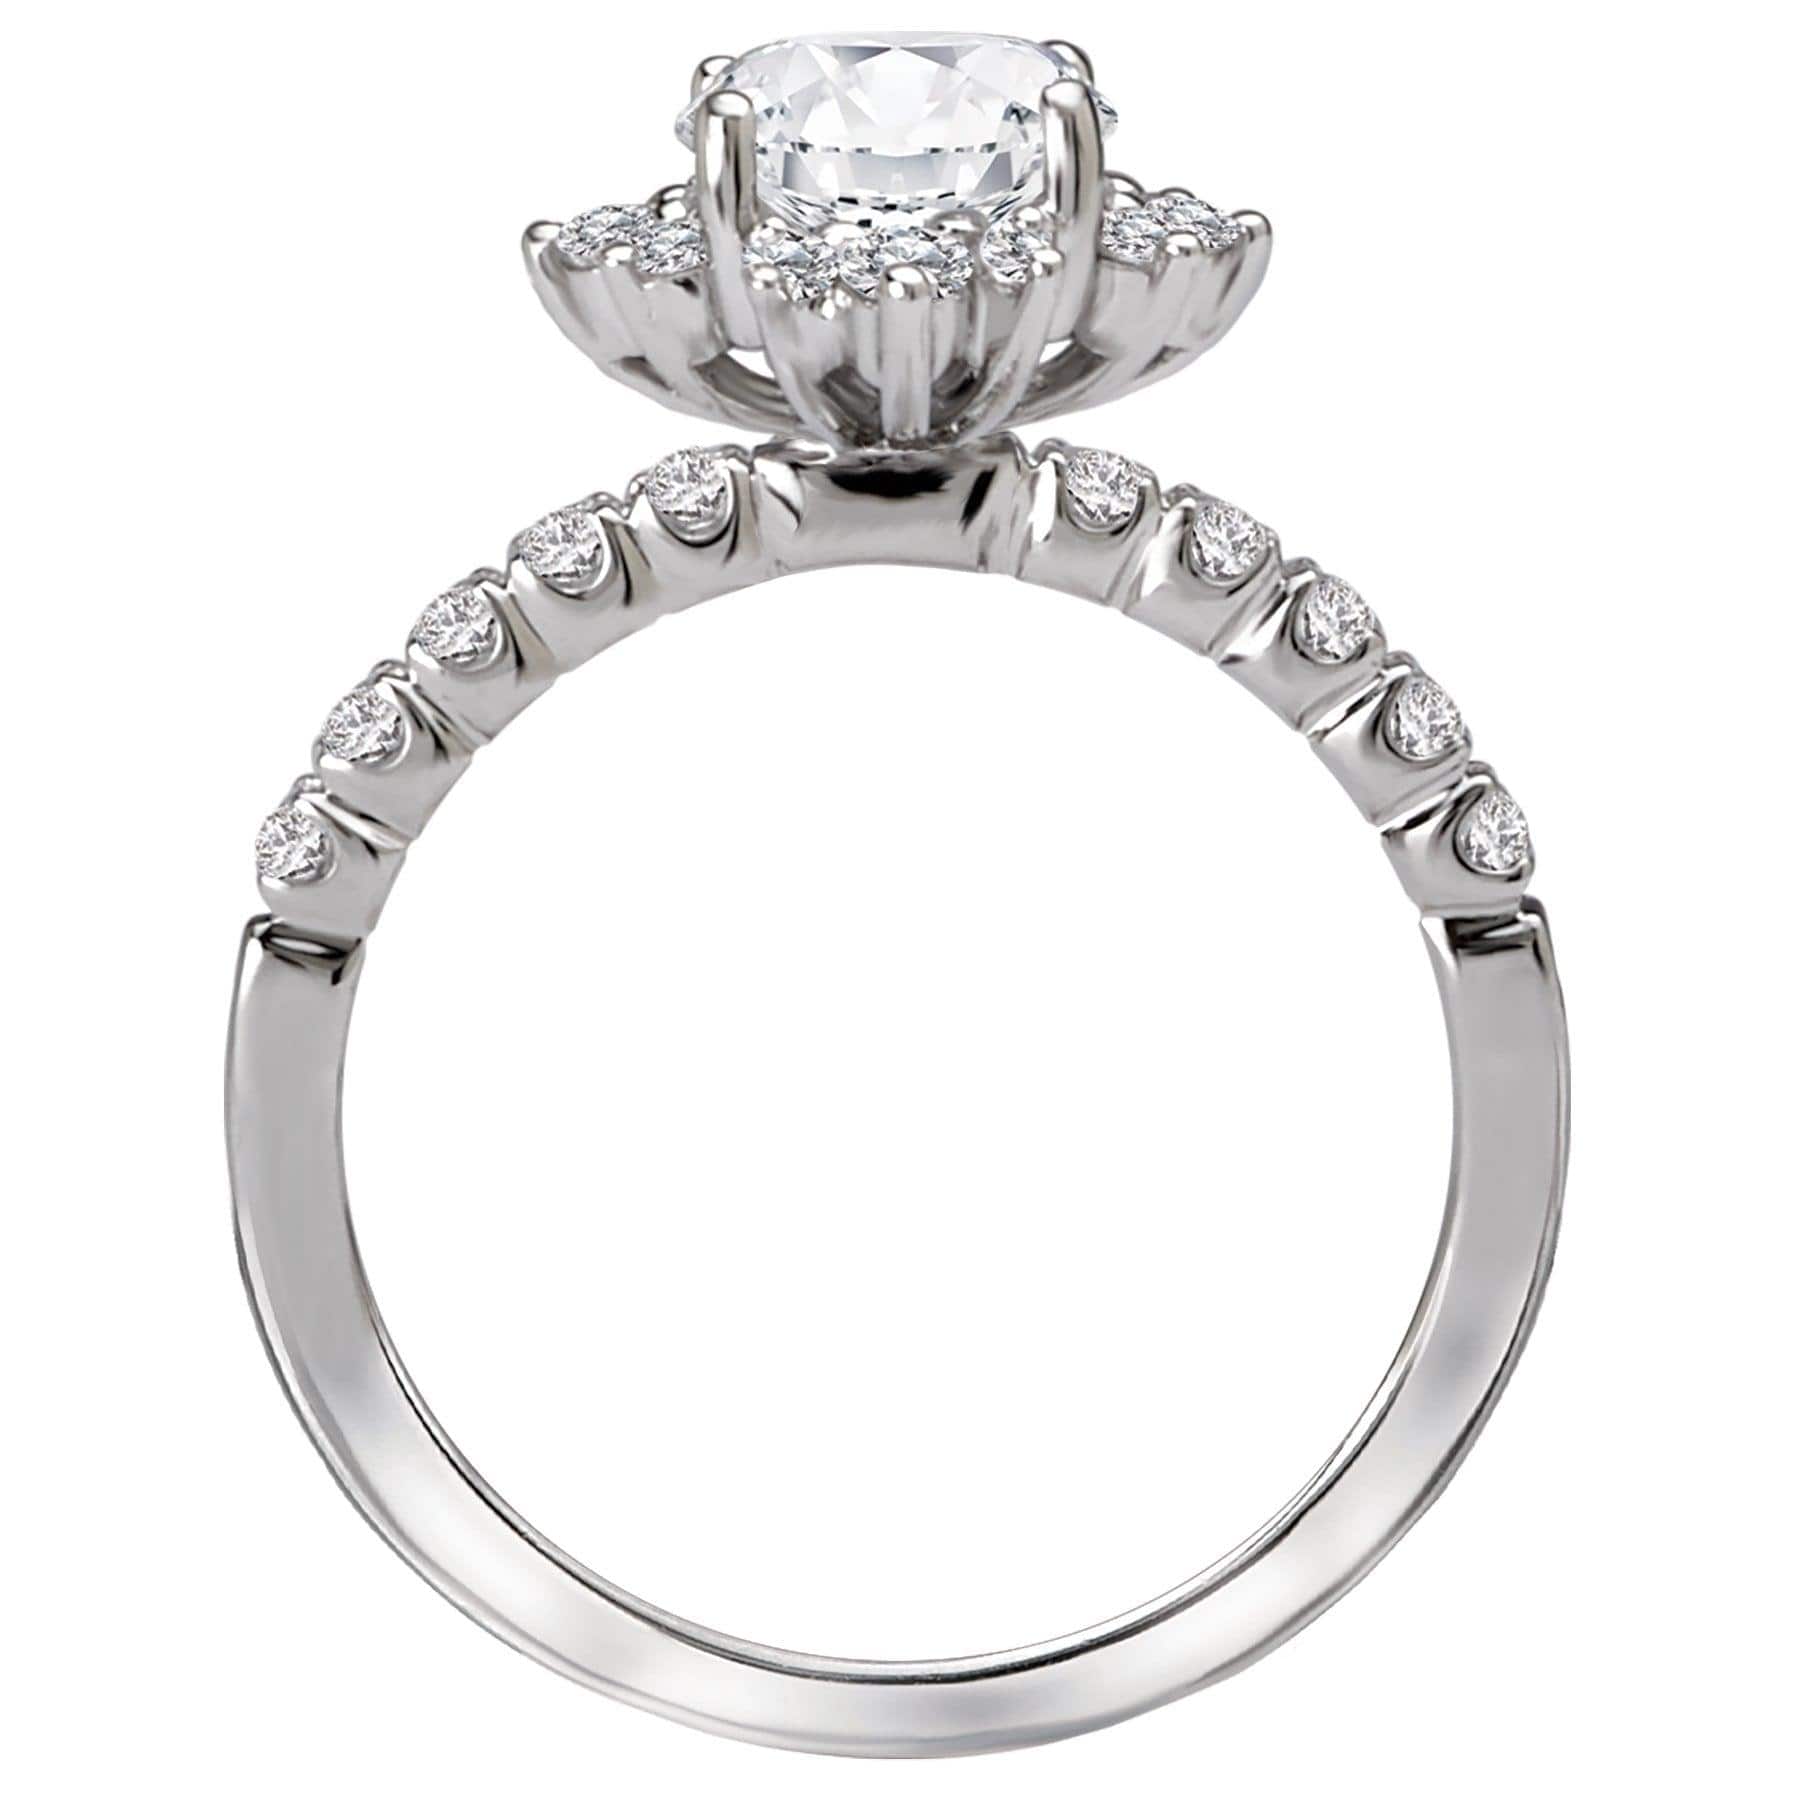 BW JAMES Engagement Rings > Diamond Rings " The Argentina" Halo Semi-Mount Diamond Ring